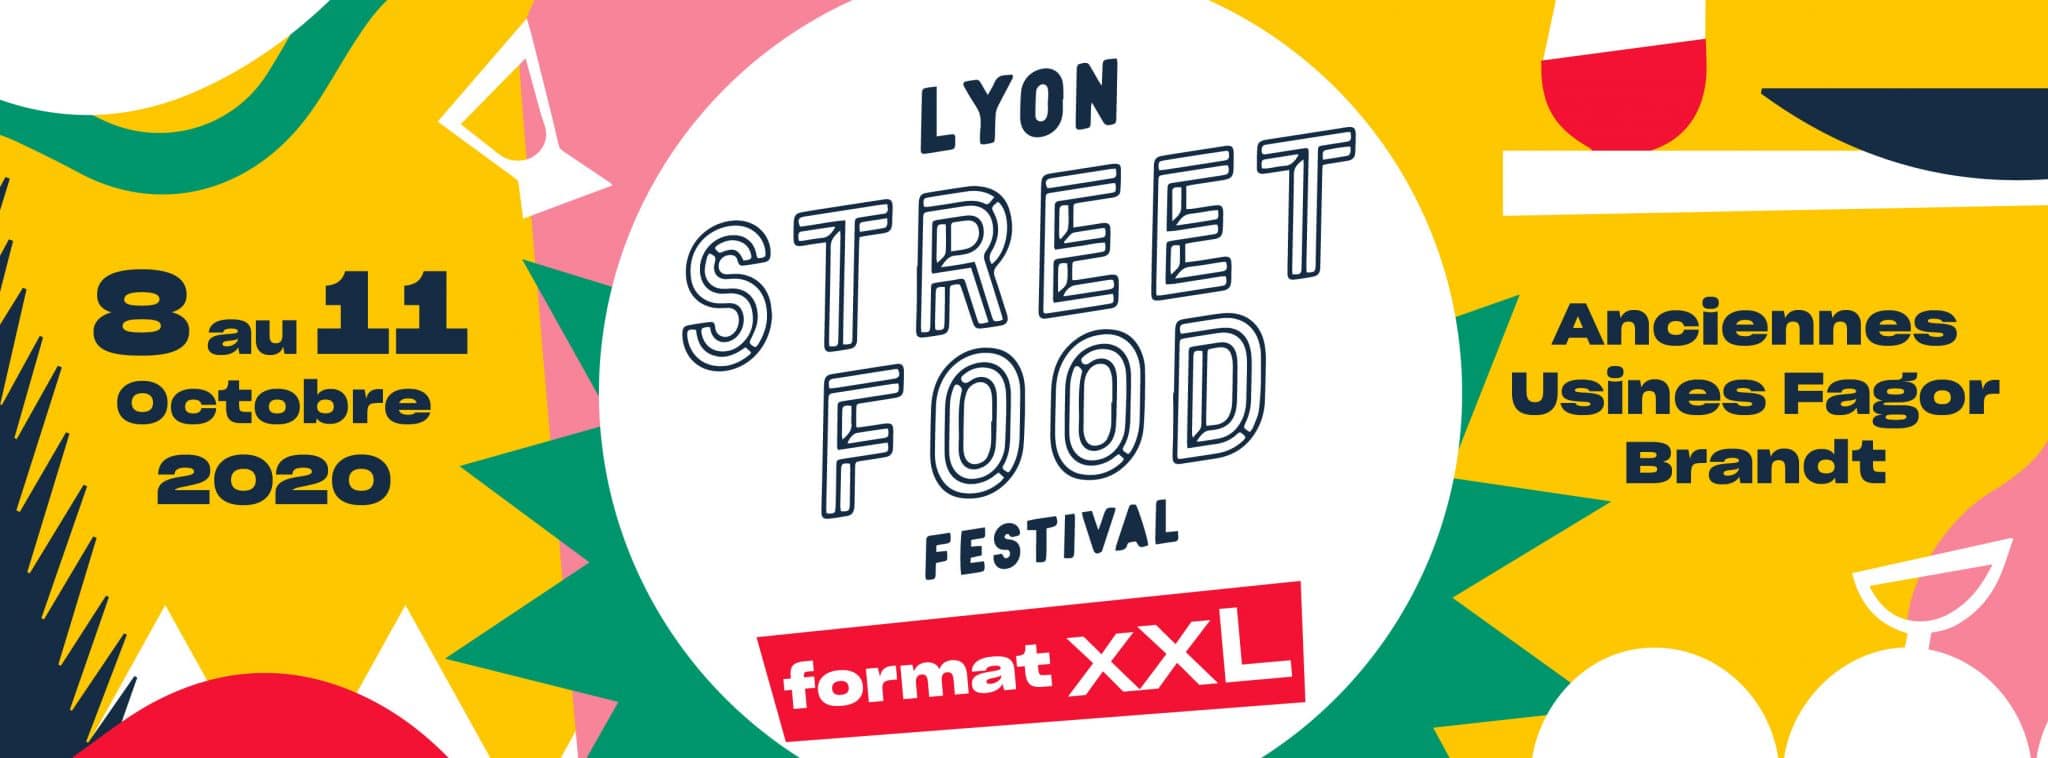 couv-lyon-street-food-festival-2020-01